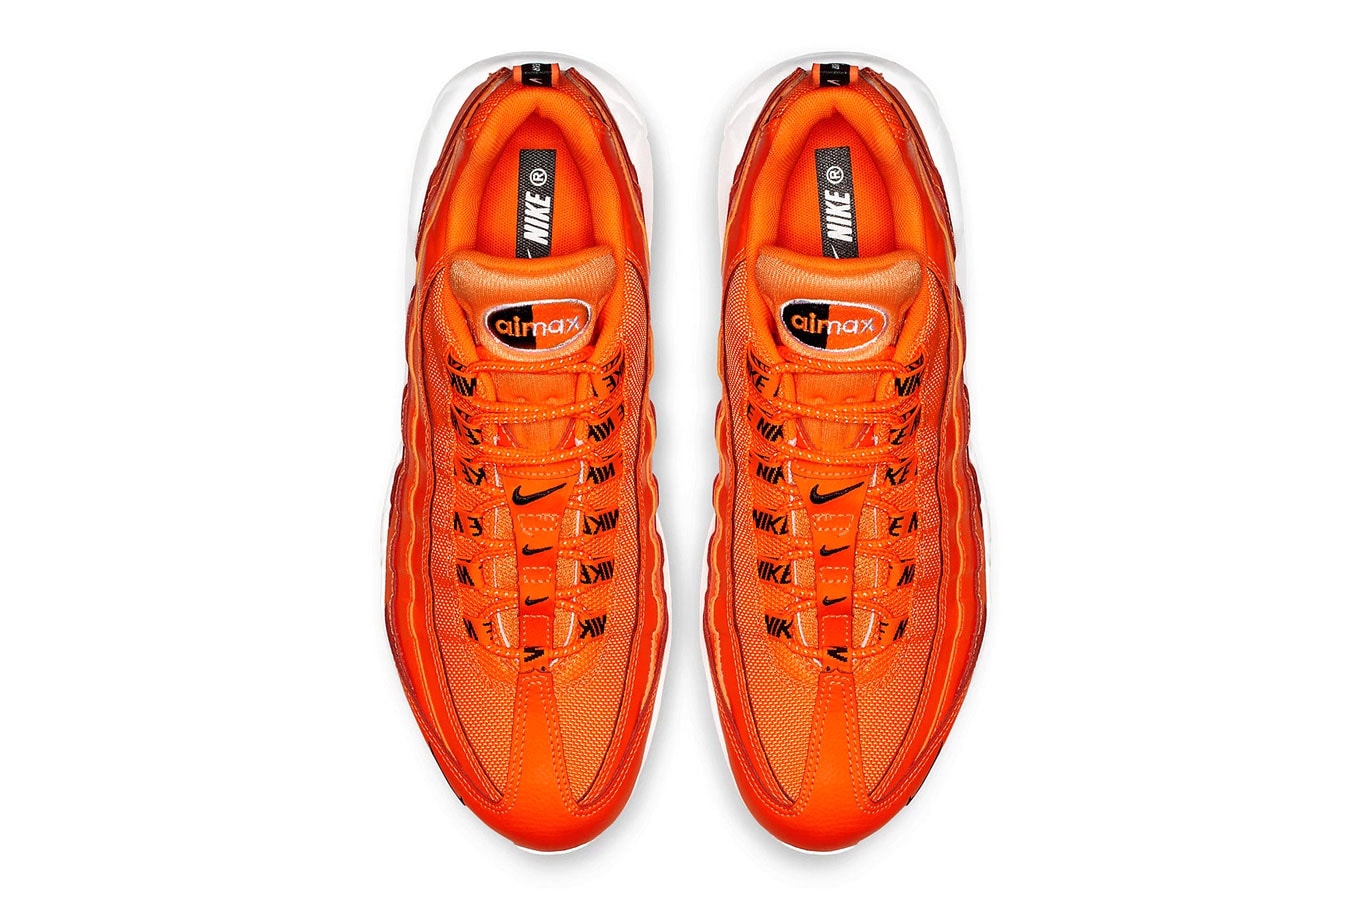 Nike Air Max 95 Premium "Overbranded" Release Date november 2018 price orange white black 